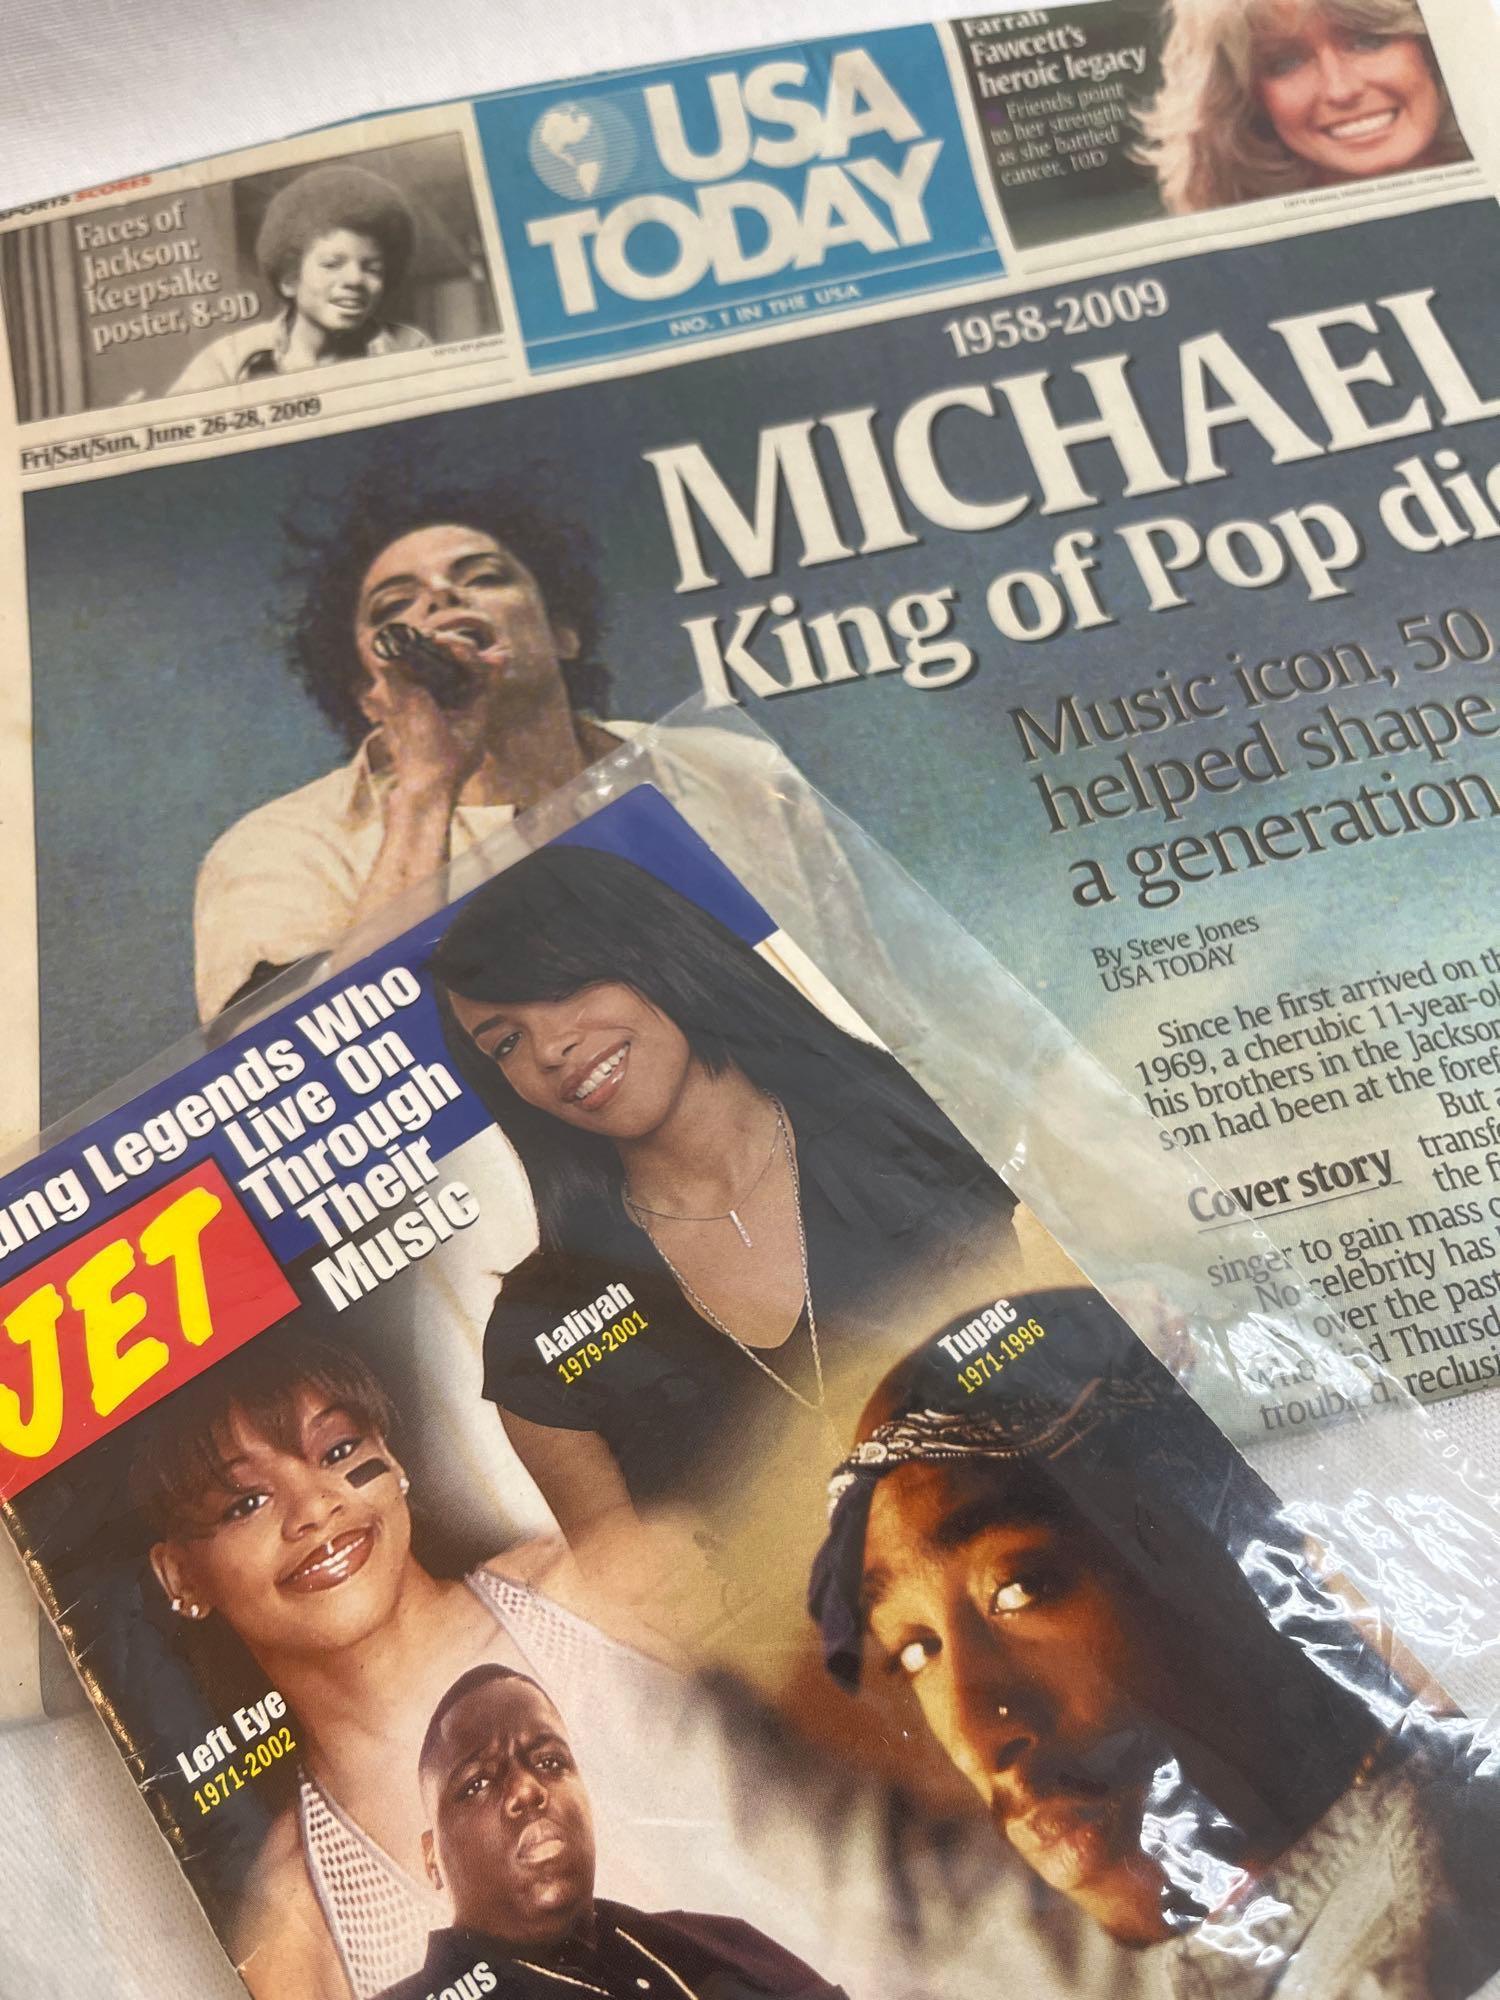 Lot of ephemera including magazines, newspaper articles. Whitney Houston, Michael Jackson, Notorious